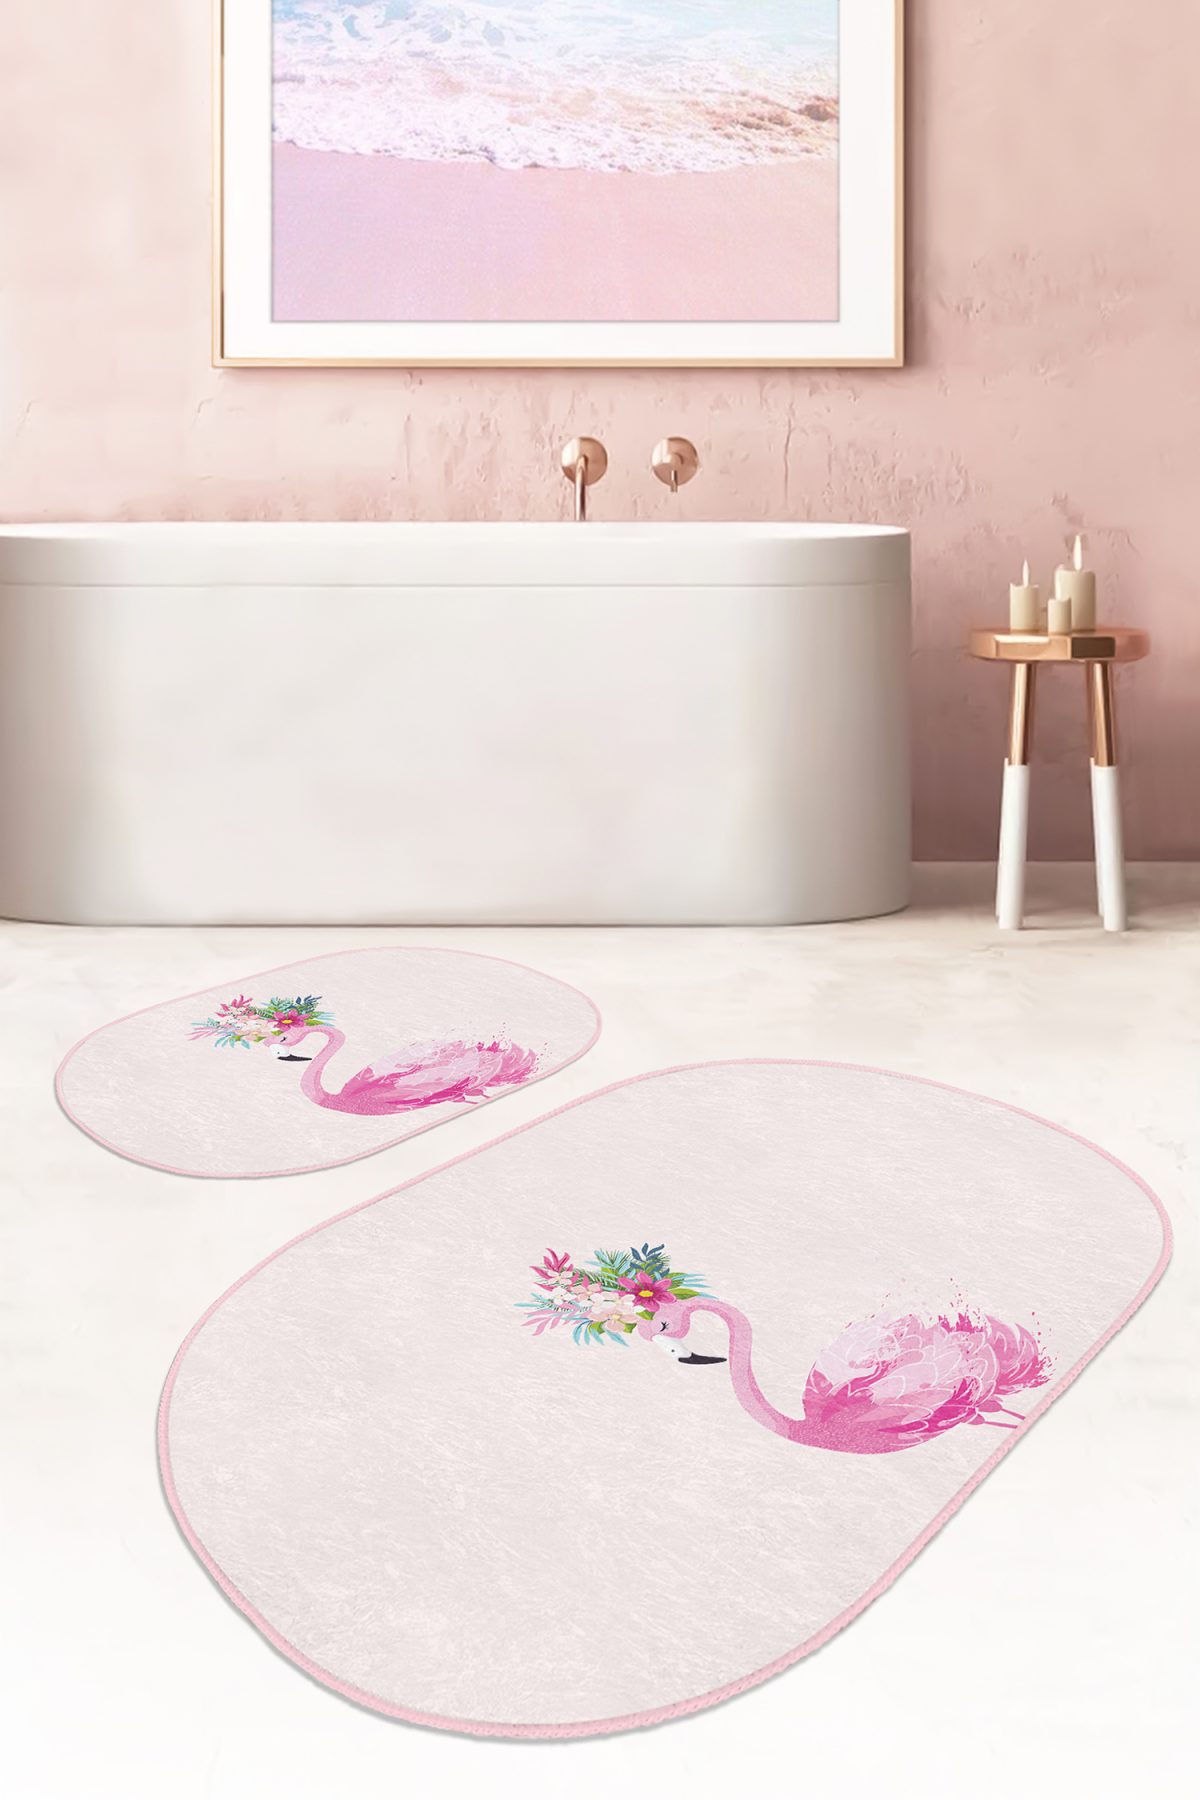 Pembe Zemin Flamingo Özel Tasarım 2'li Oval Banyo Paspas Takımı & Mutfak Paspas Seti Realhomes